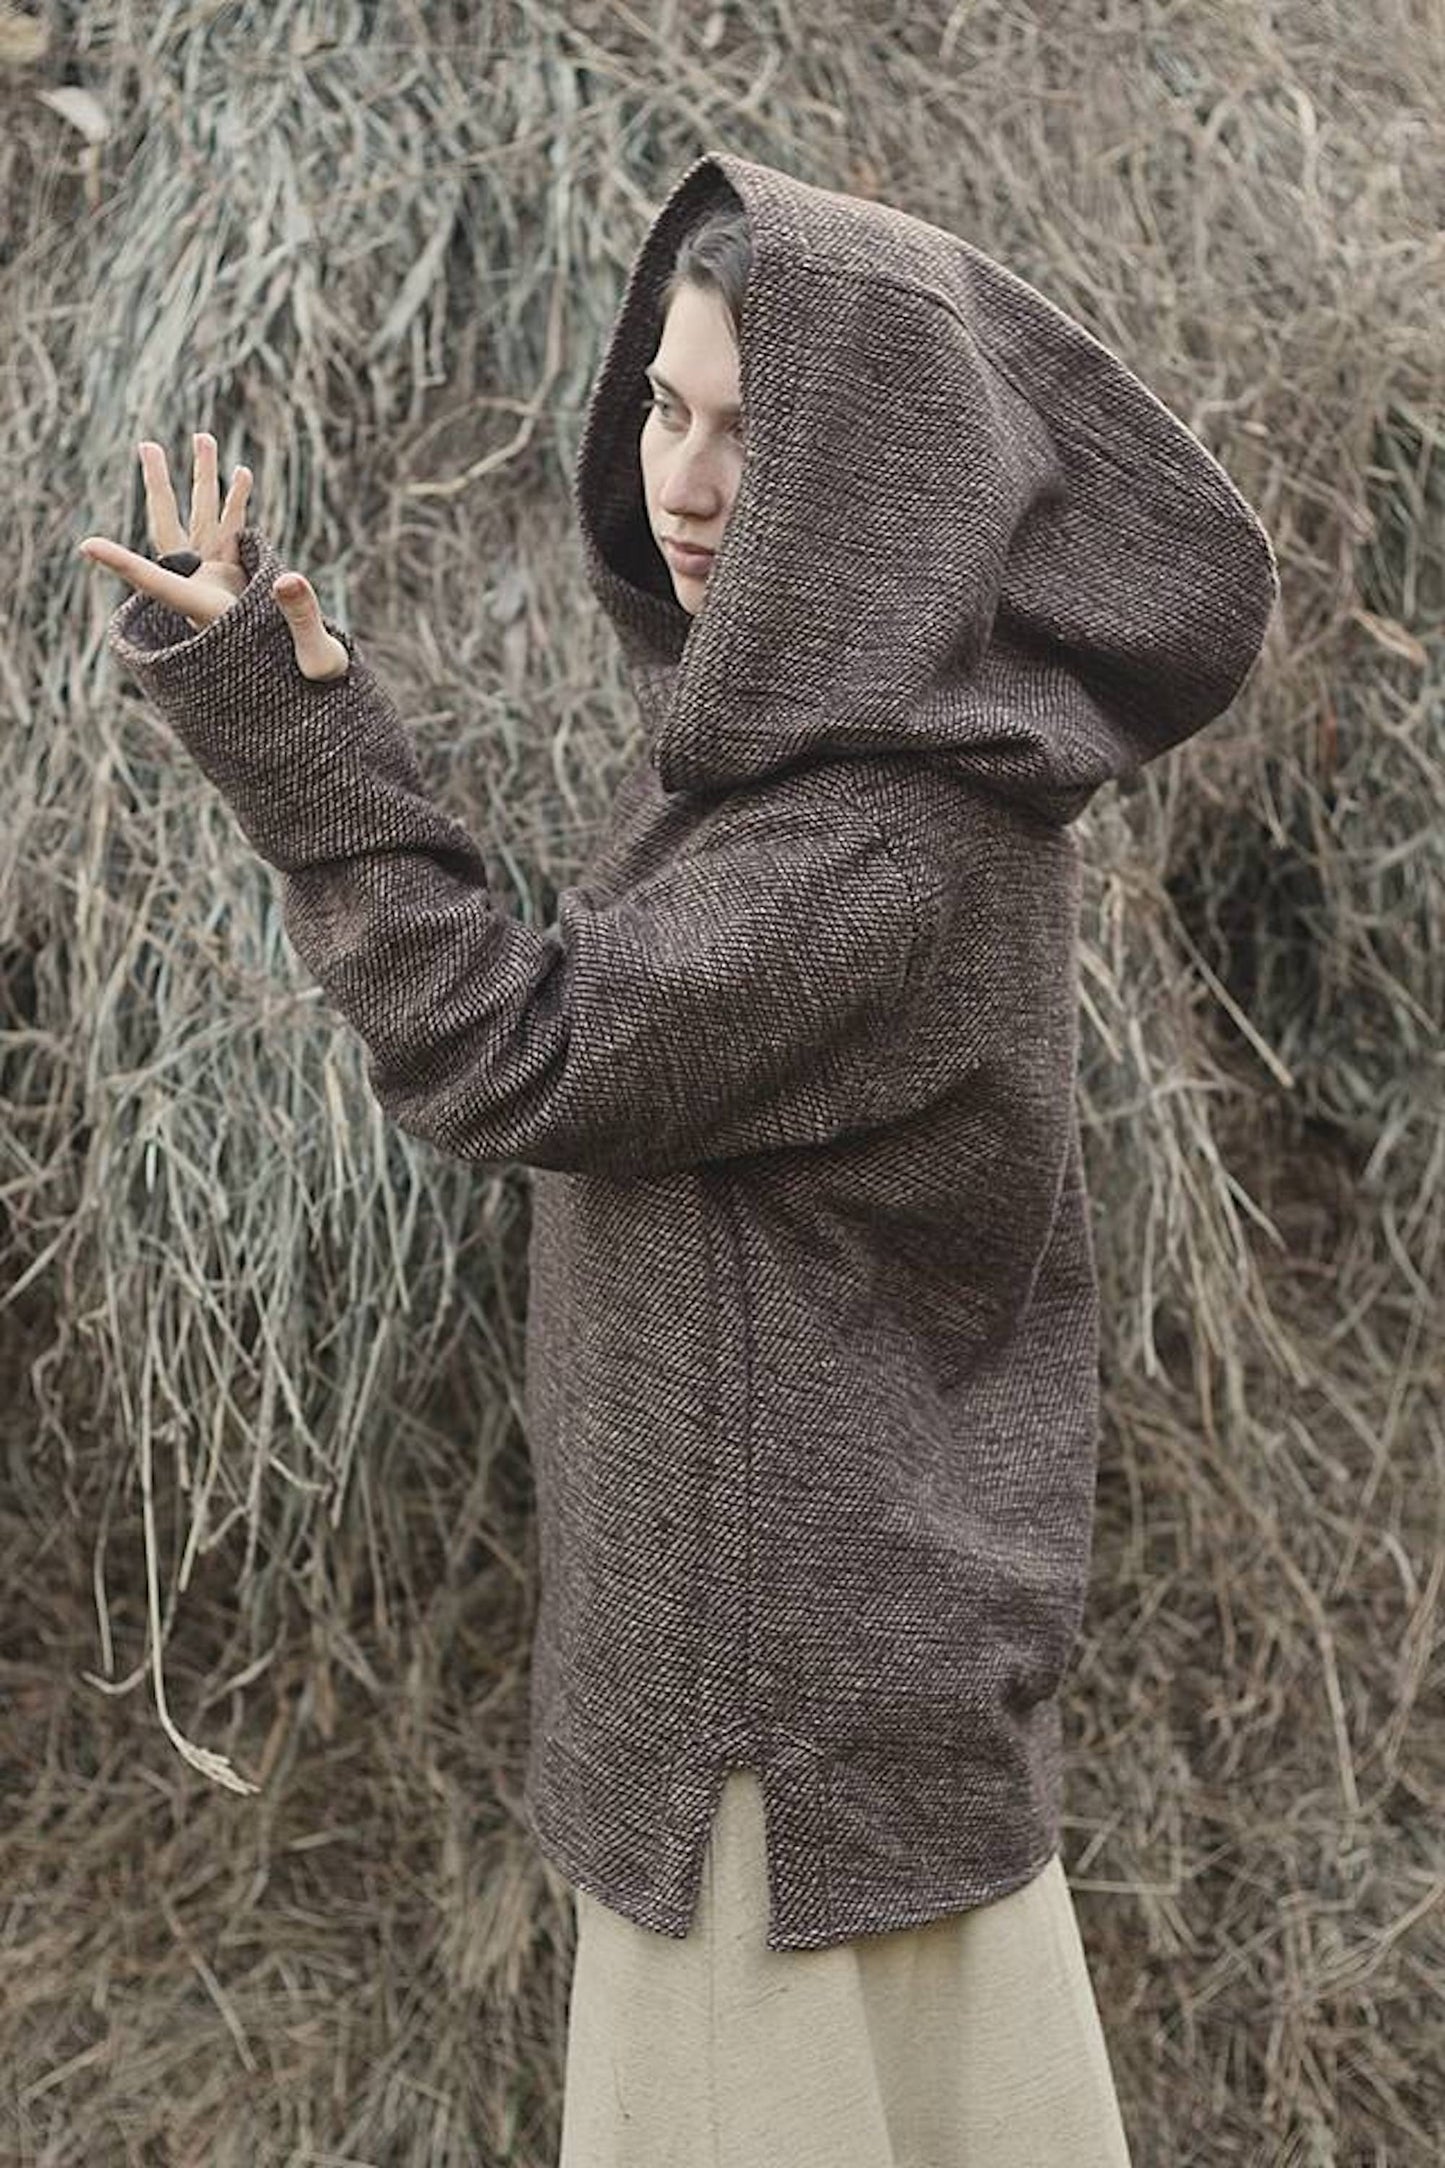 Nomad Women Pullover with Hoodie ⫸ Handwoven Hemp Wool